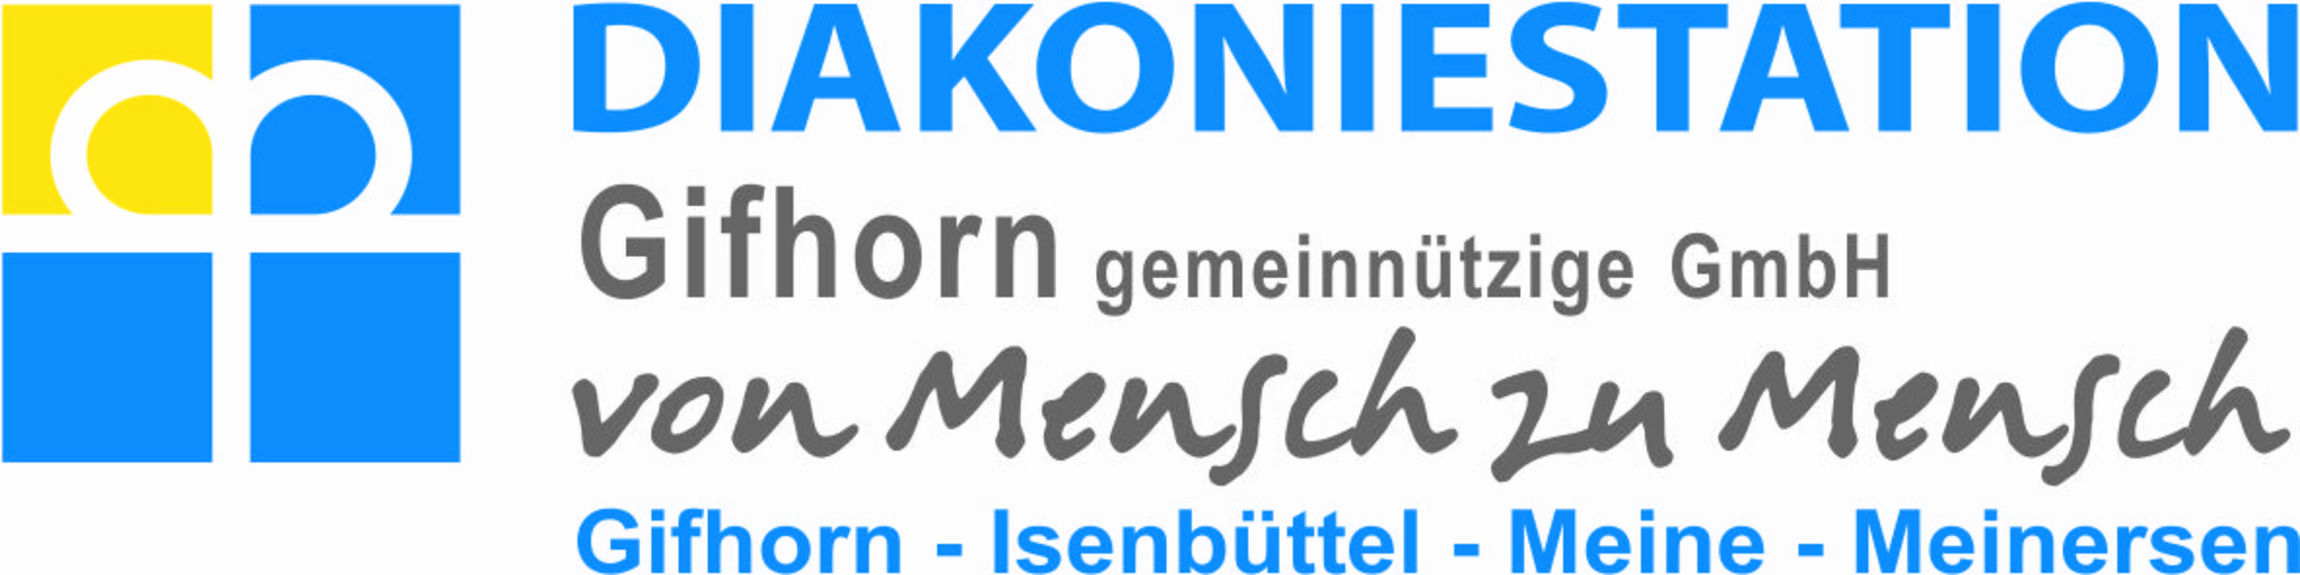 Logo Diakoniestation Gifhorn gemGmbH_kl